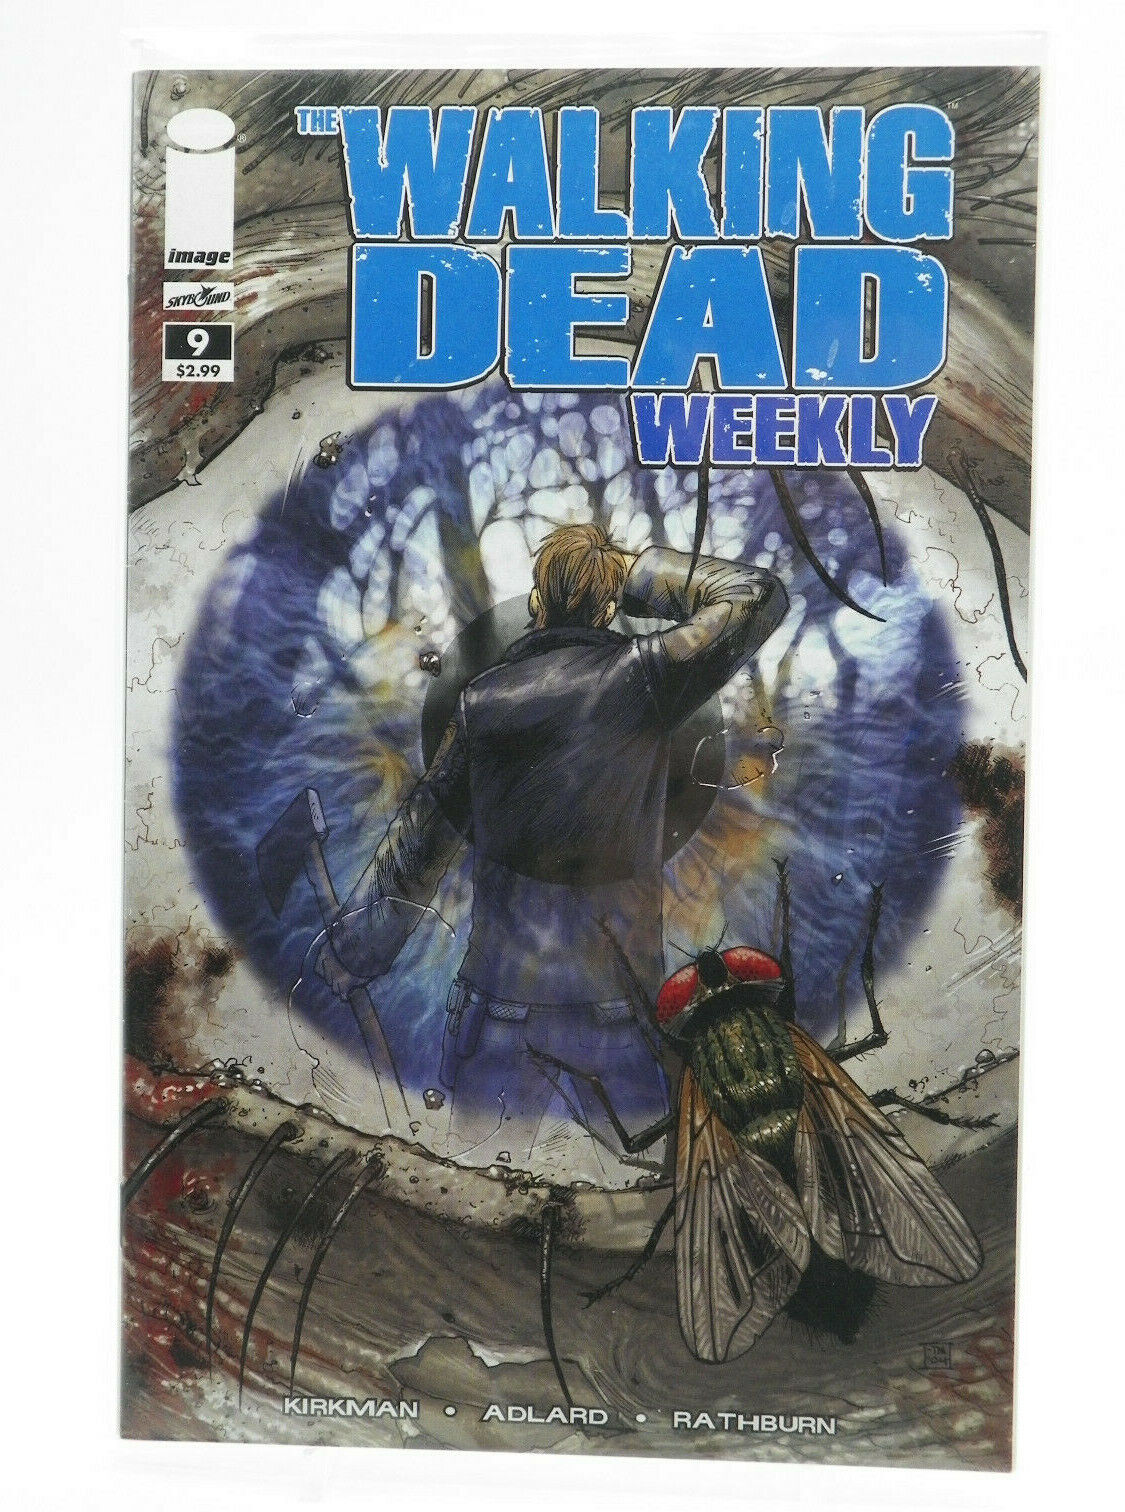 The Walking Dead Weekly #9 FN/VF 